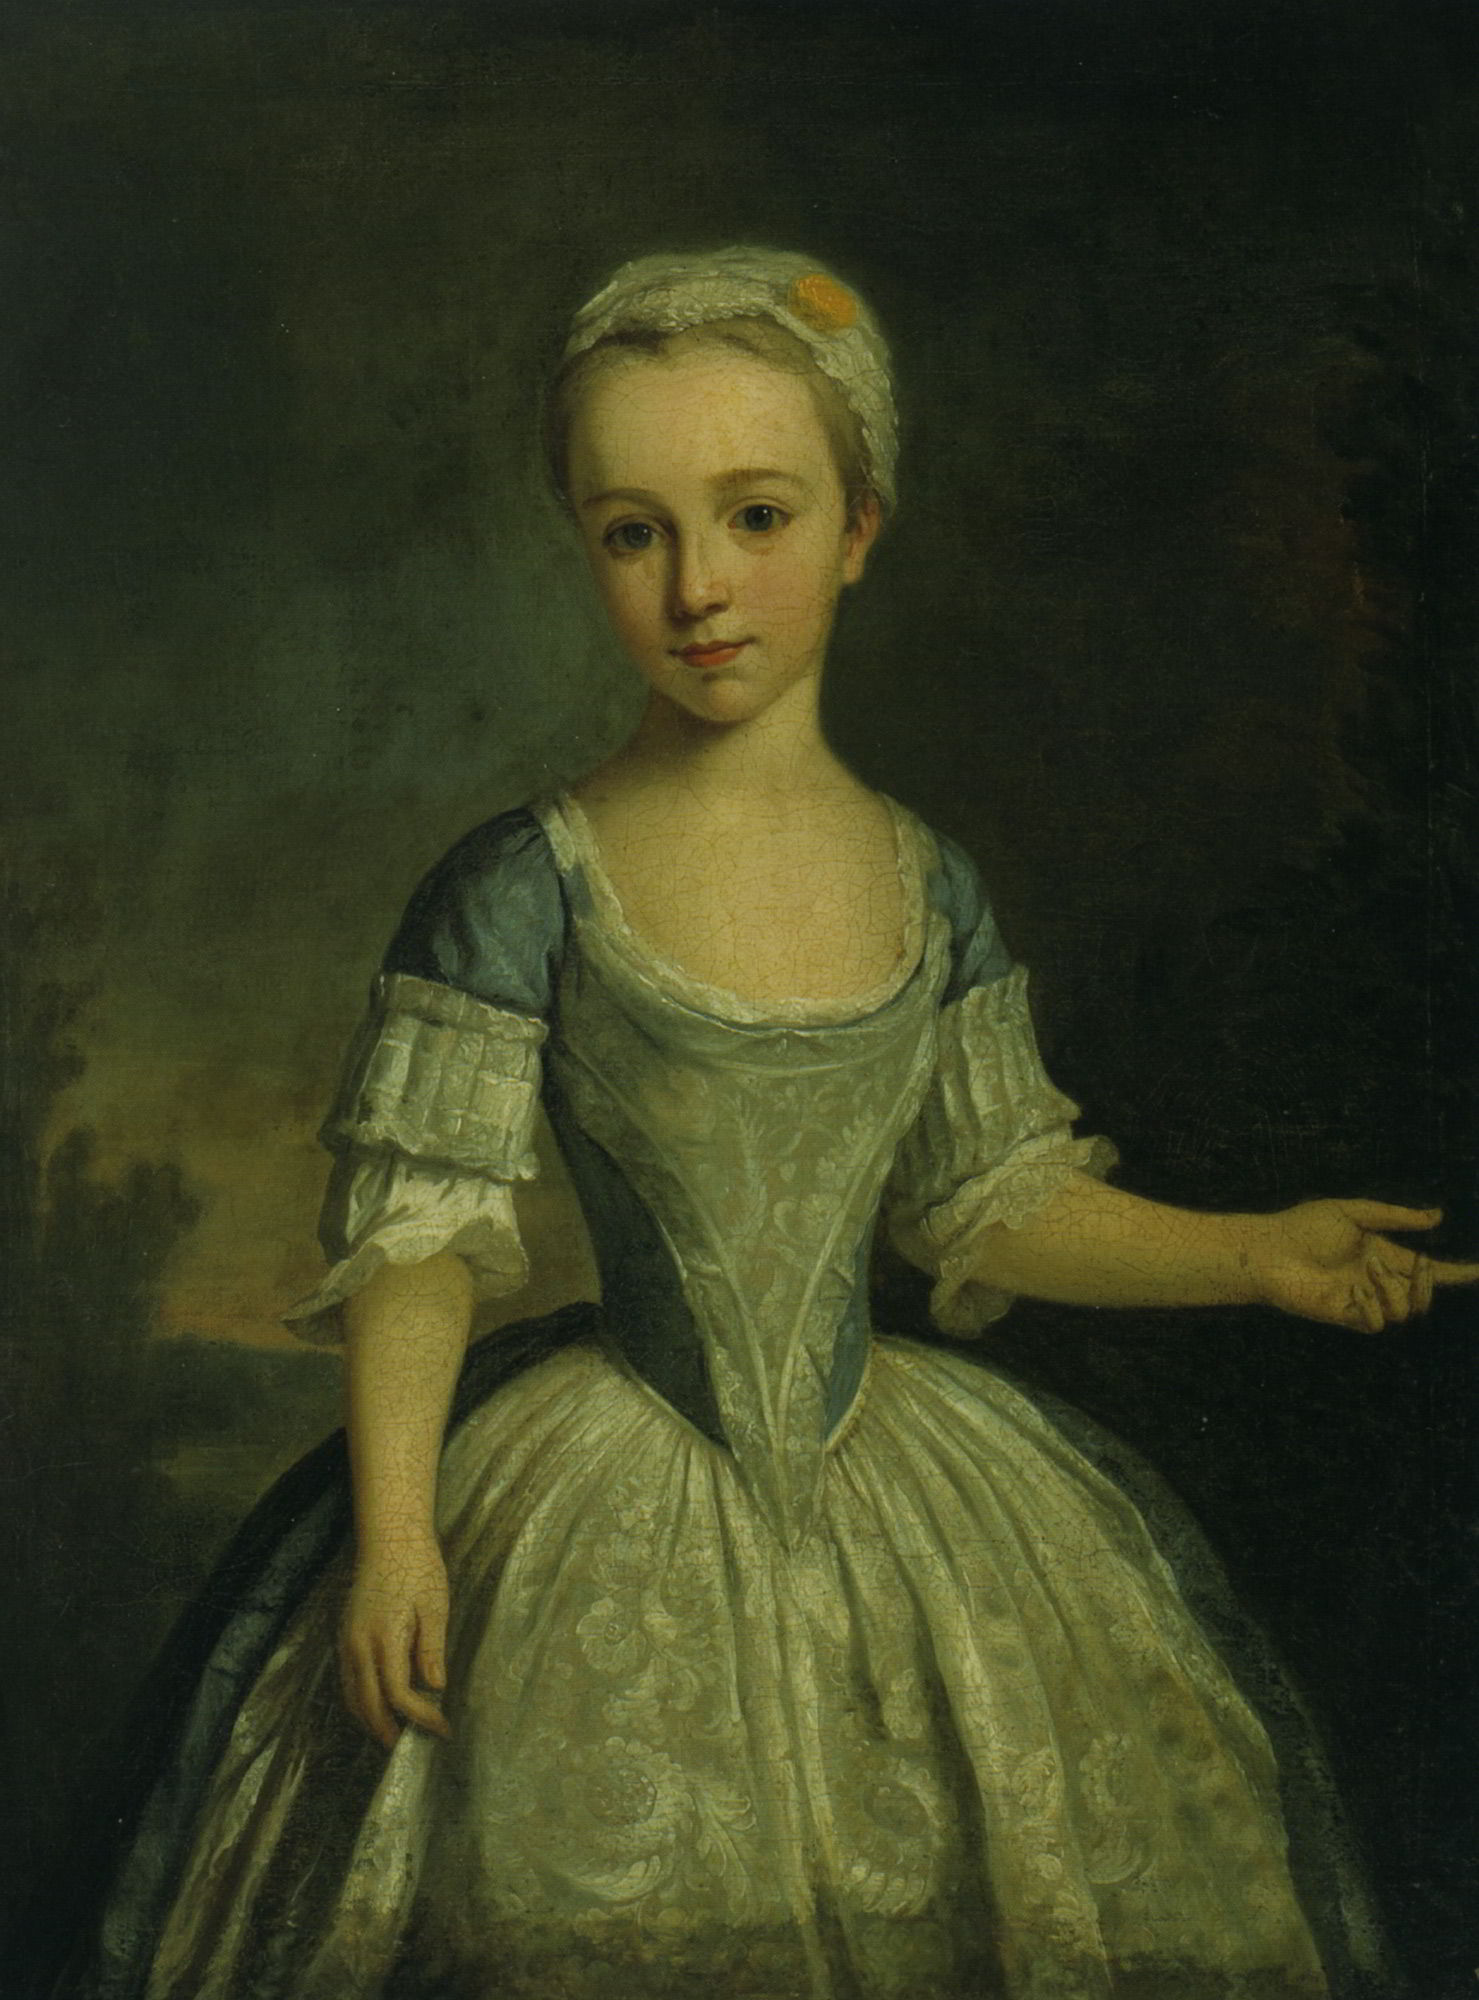 Portrait of a Young Girl by Bartholomew Dandridge